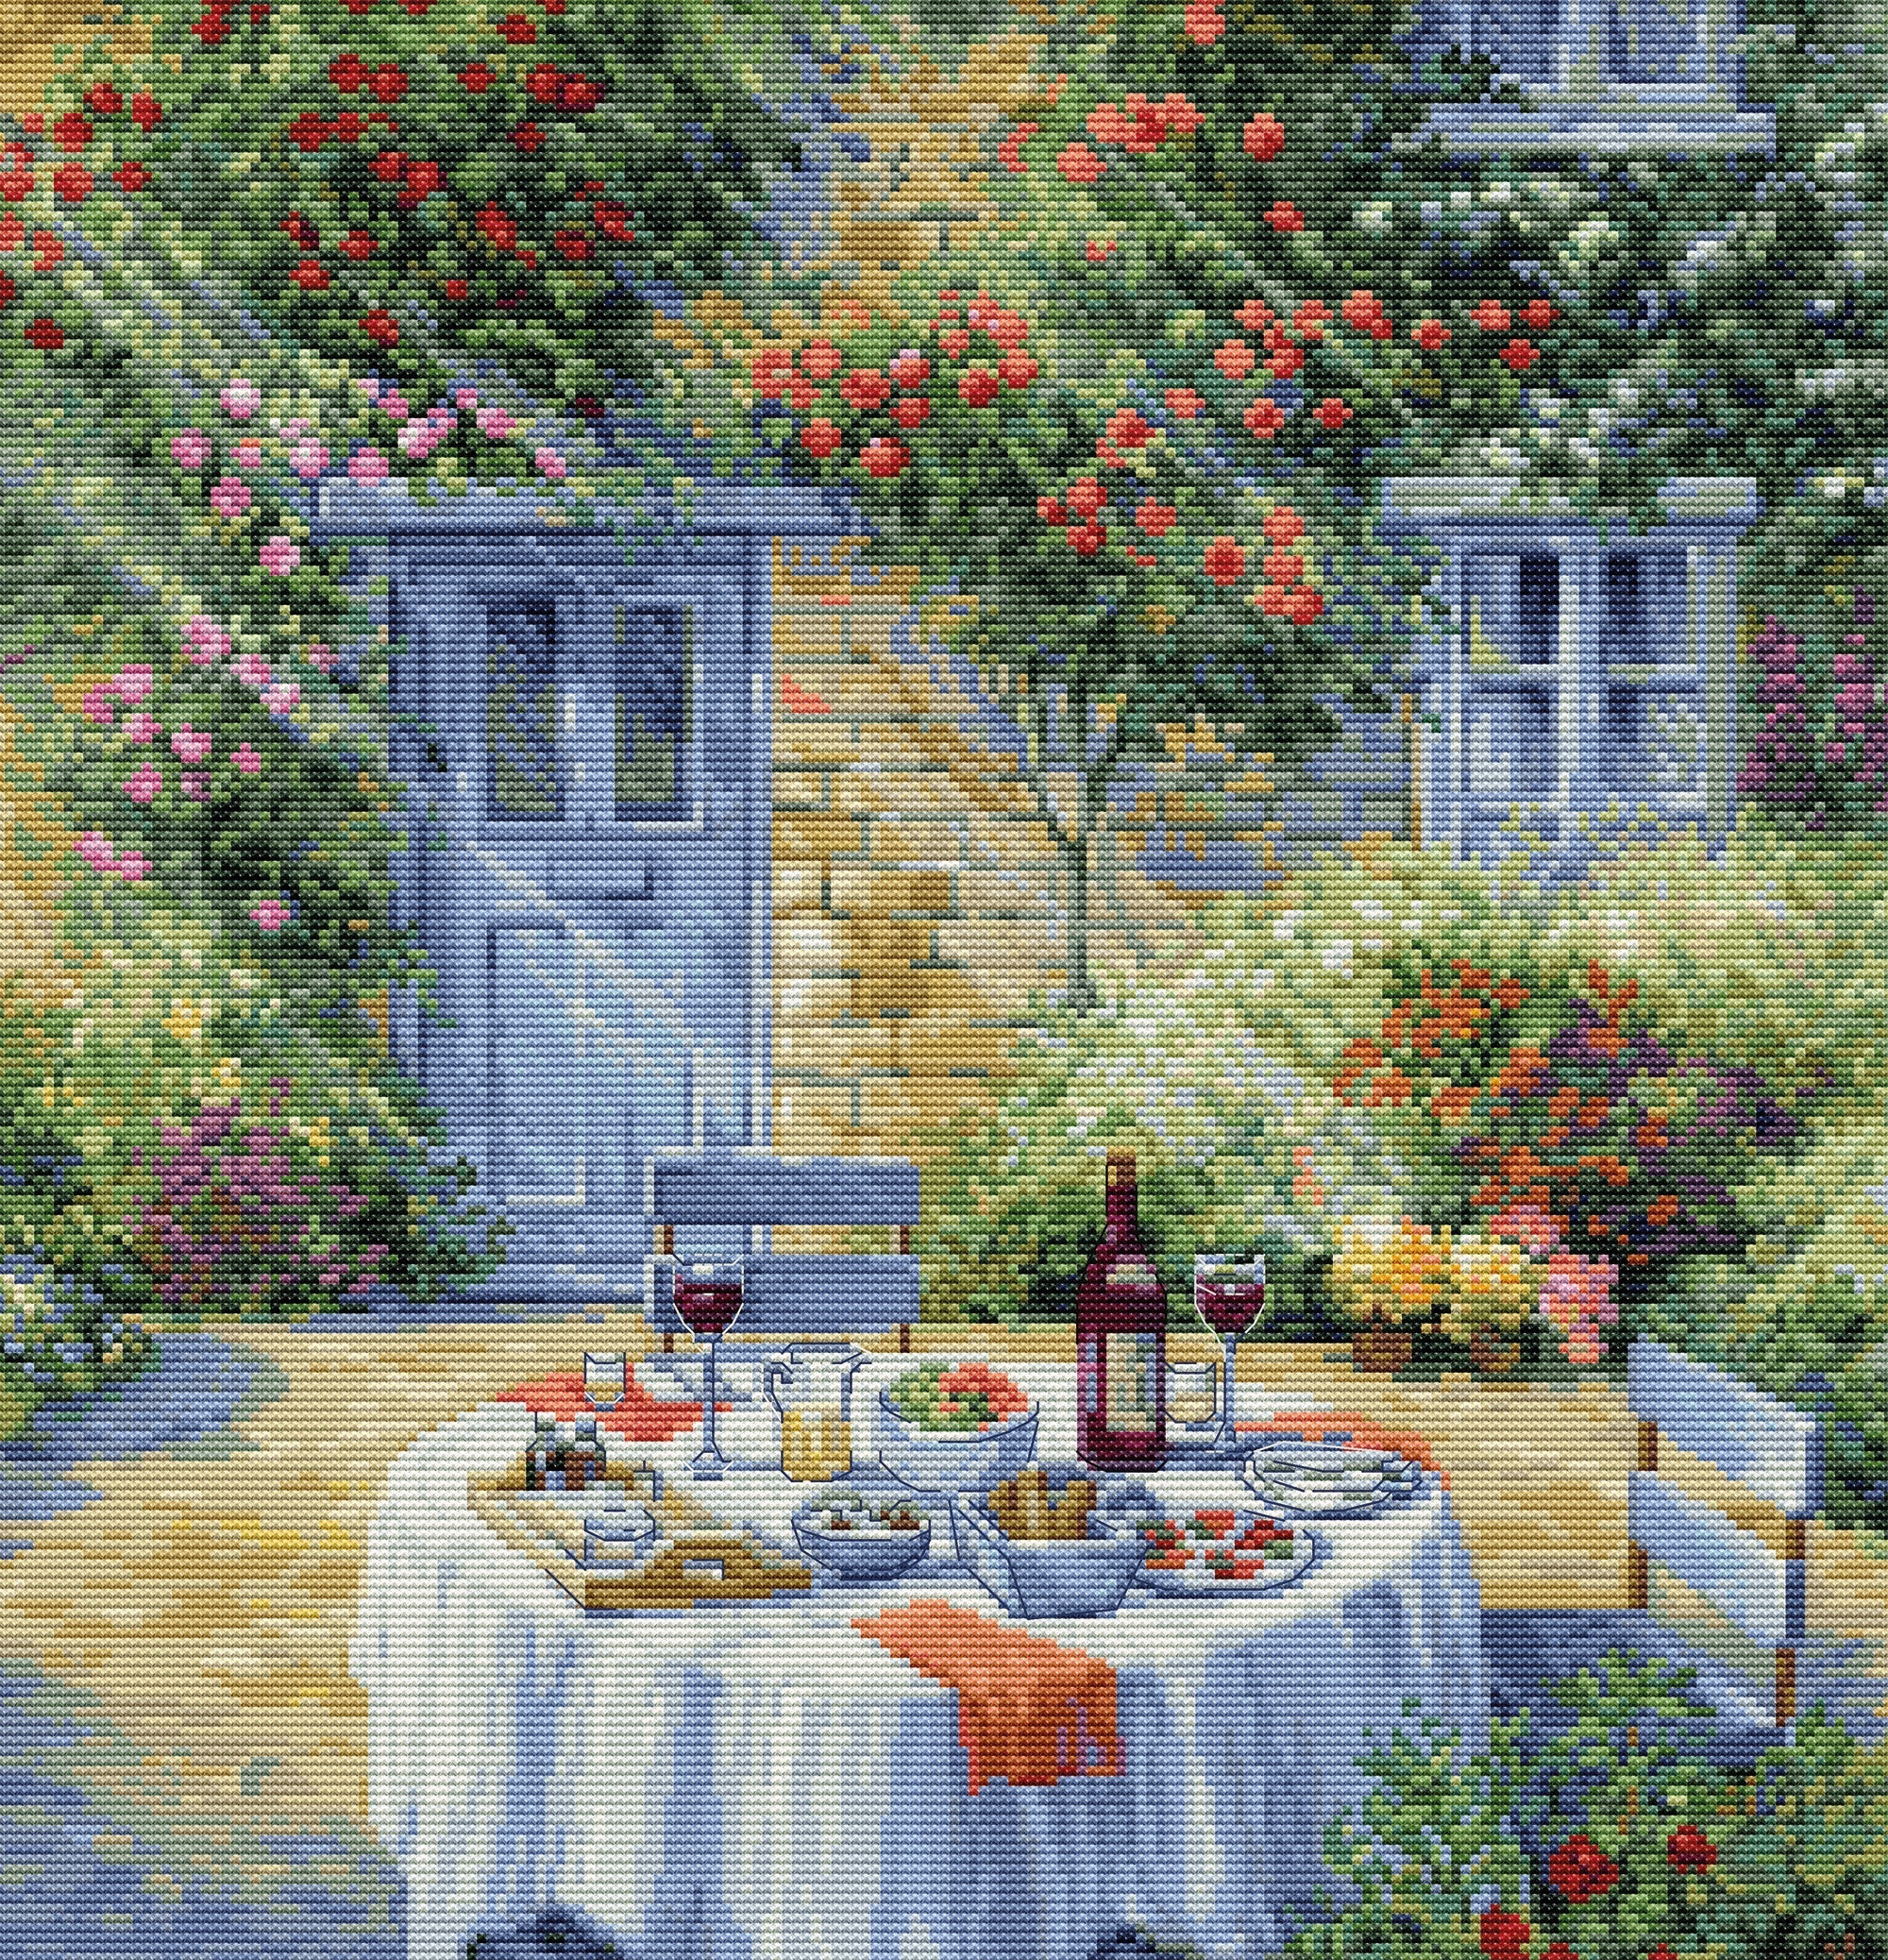 Cross Stitch Kit Luca-S - Romantic Garden, BU5055